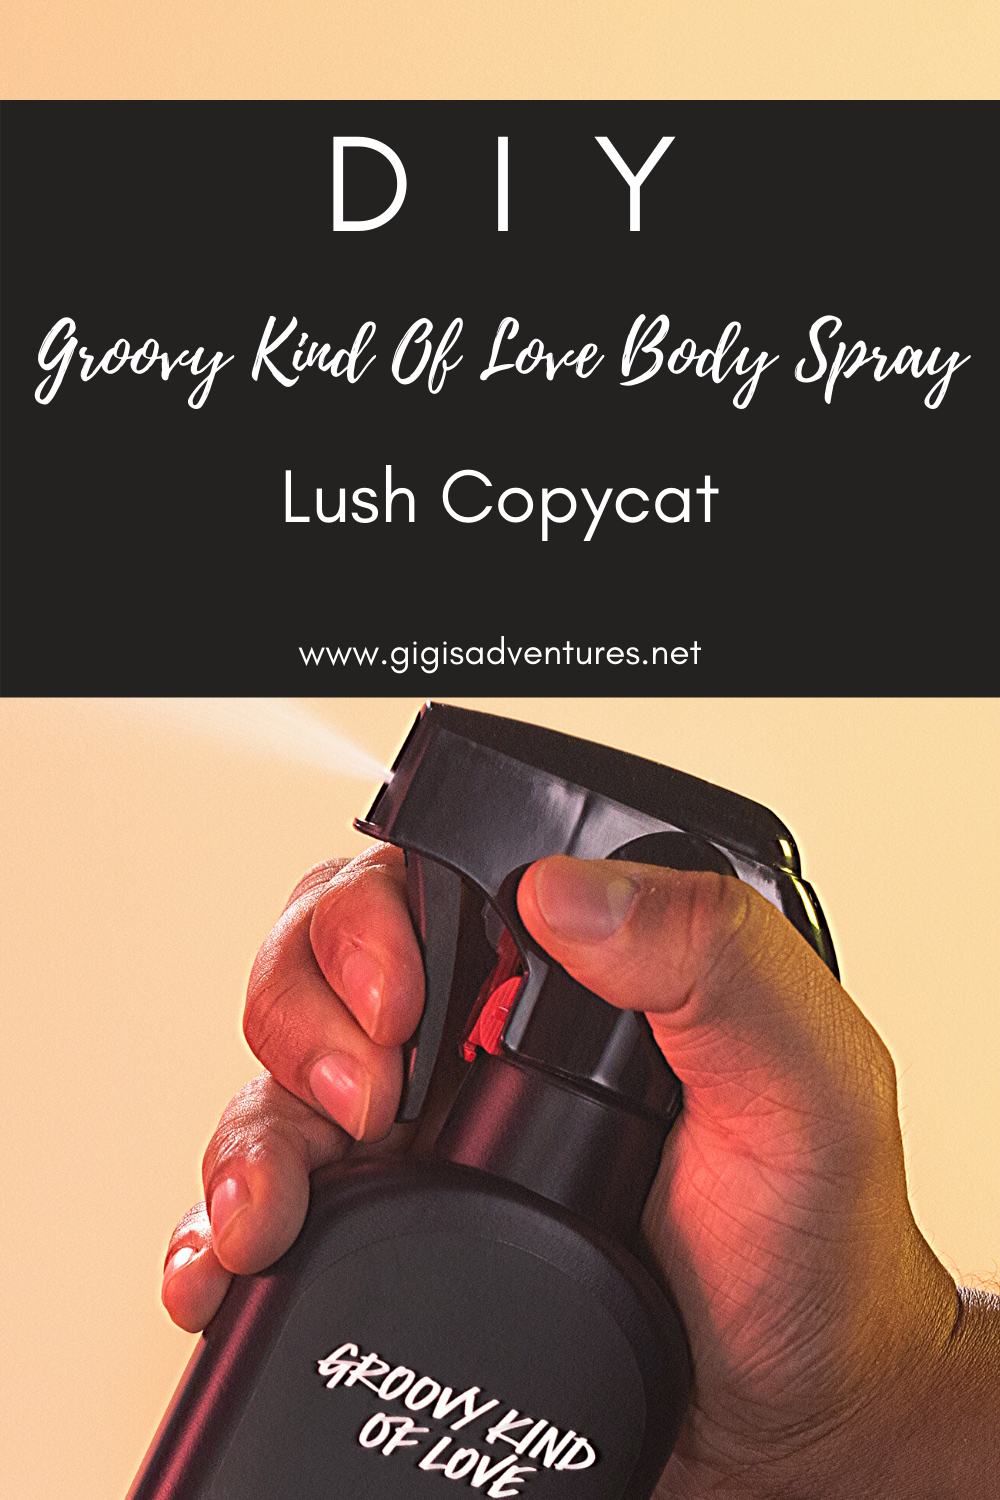 DIY Lush Groovy Kind of Love Body Spray - Lush Copycat Recipe